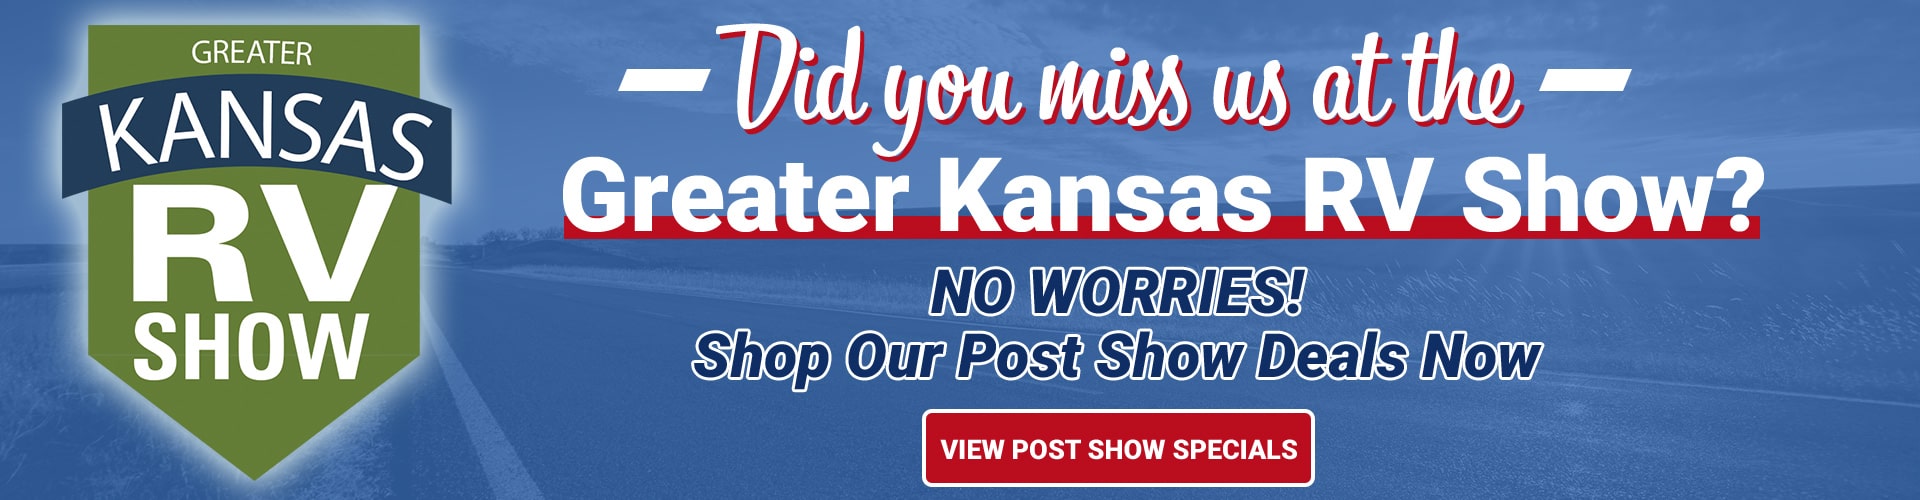 Greater Kansas RV Post Show